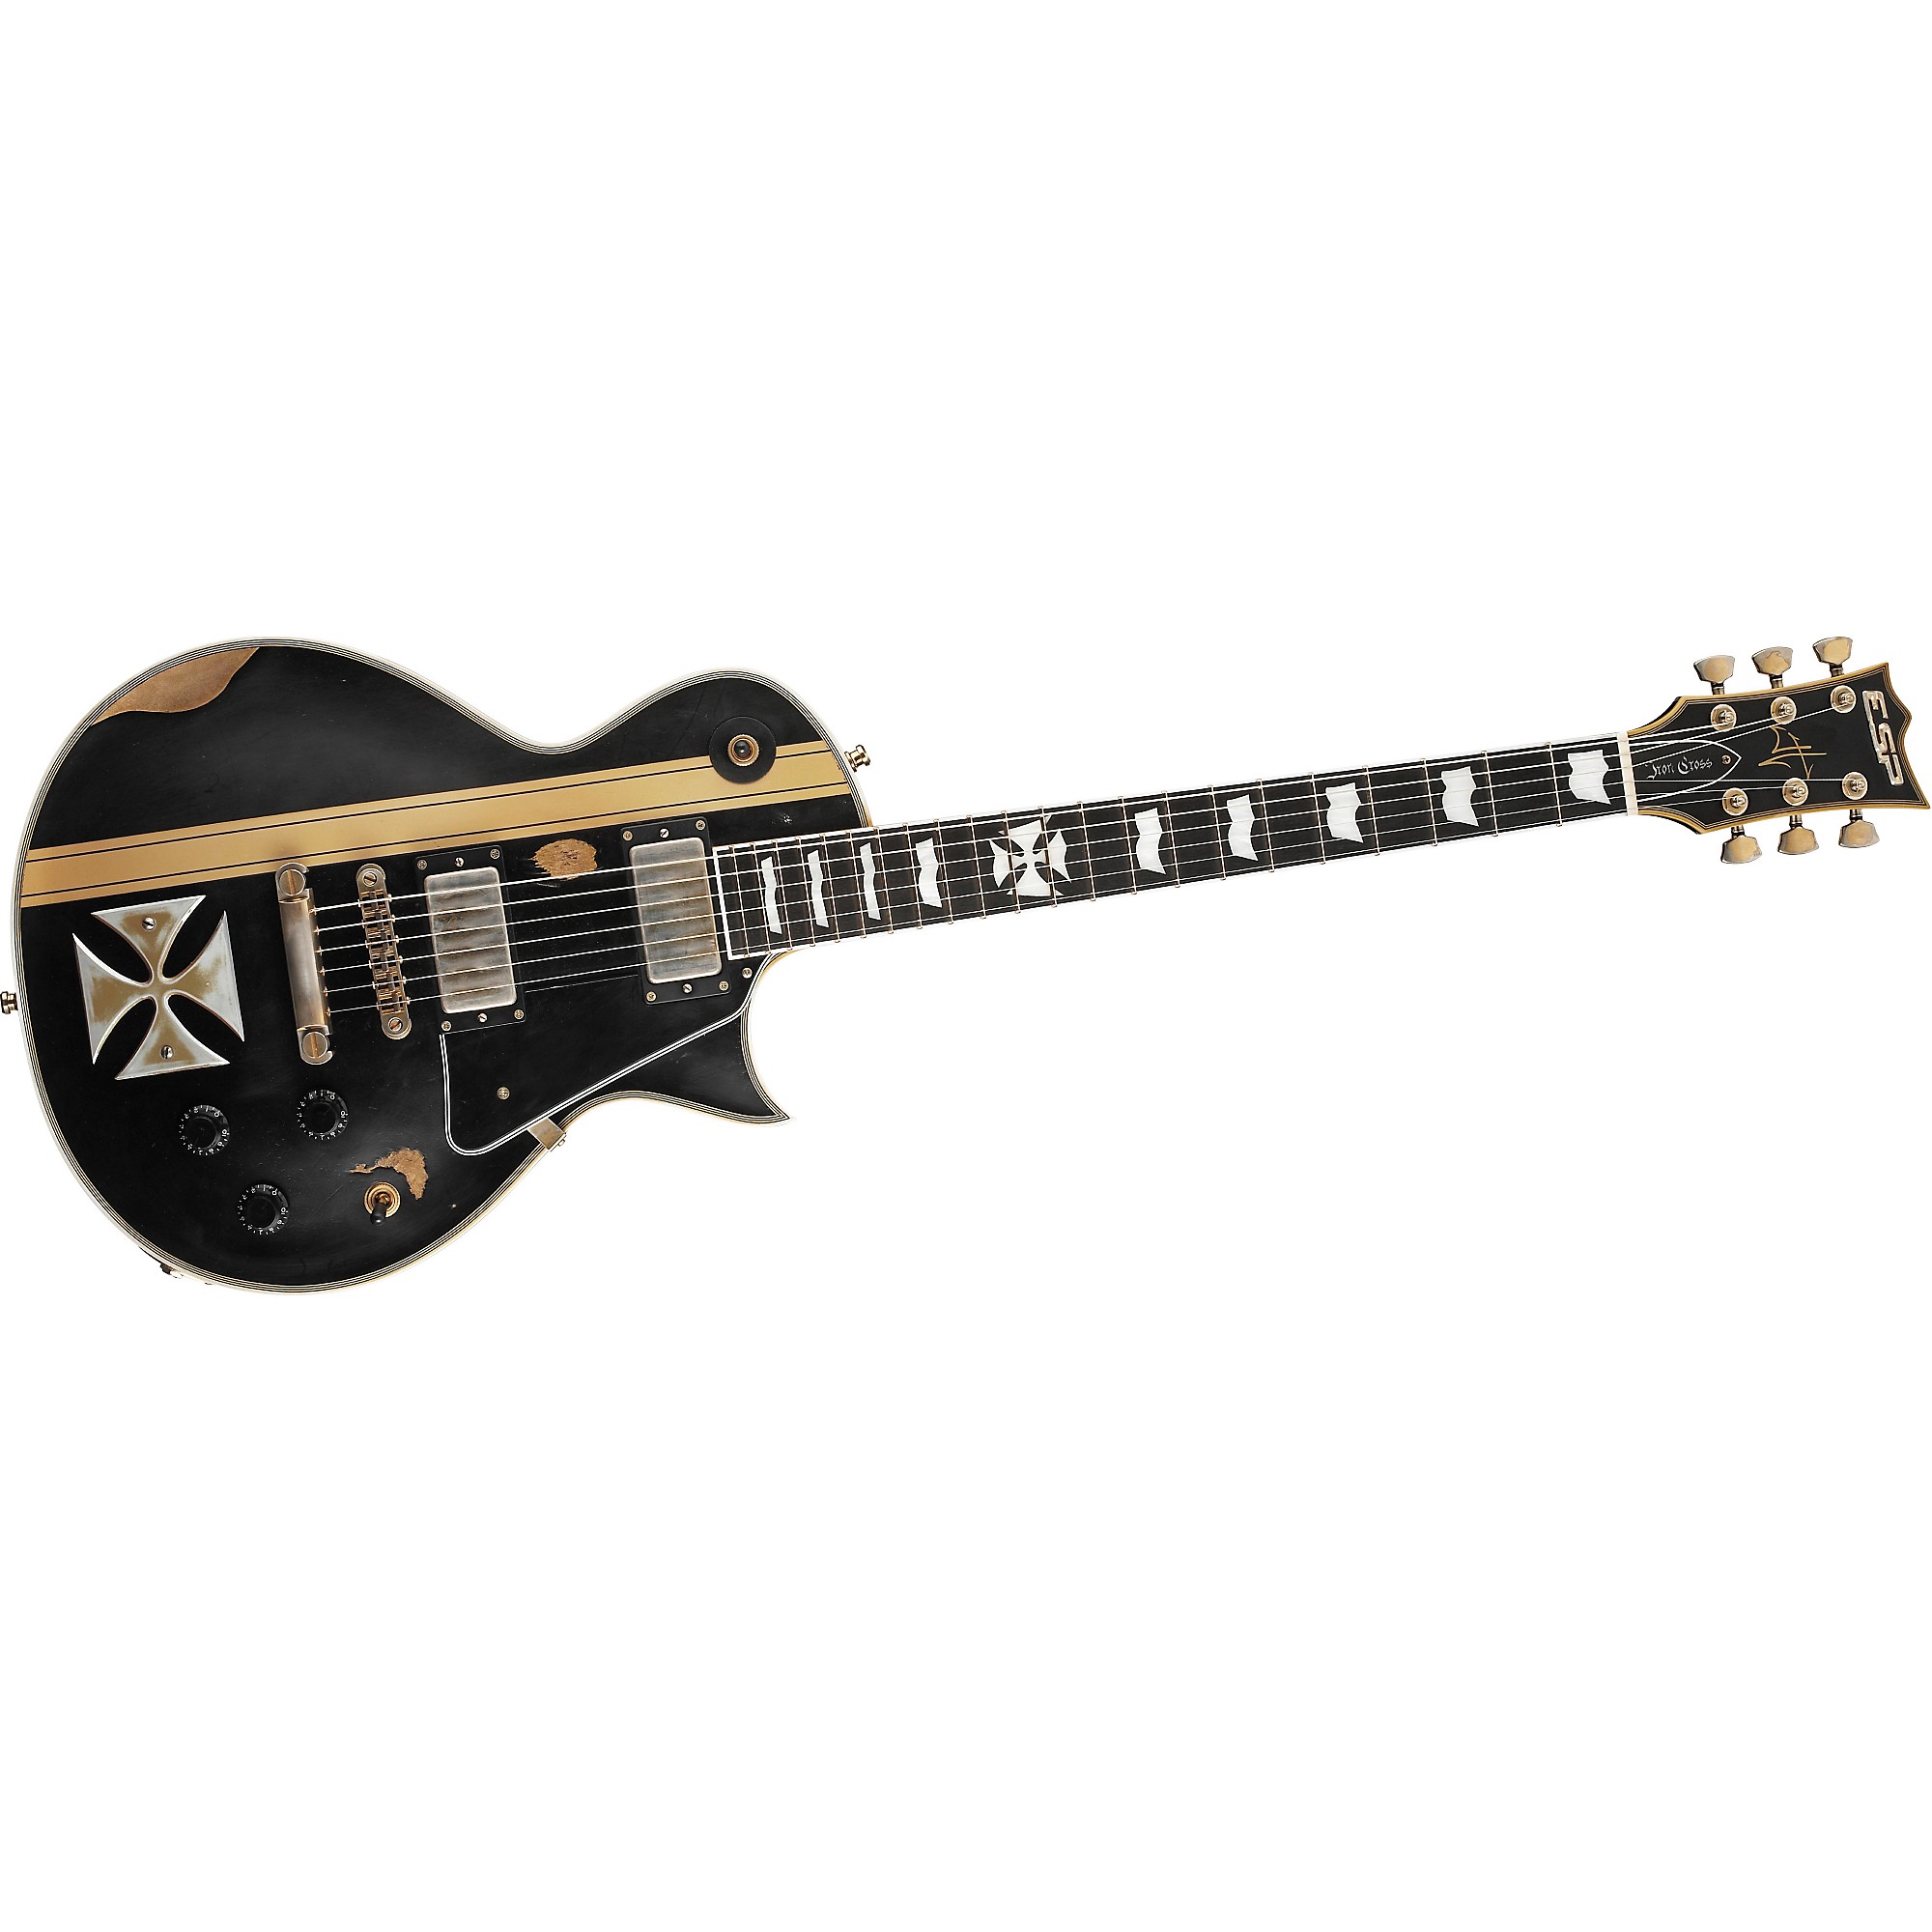 kabel Dem planer ESP James Hetfield Iron Cross Signature Series Electric Guitar Distressed  Black | Guitar Center